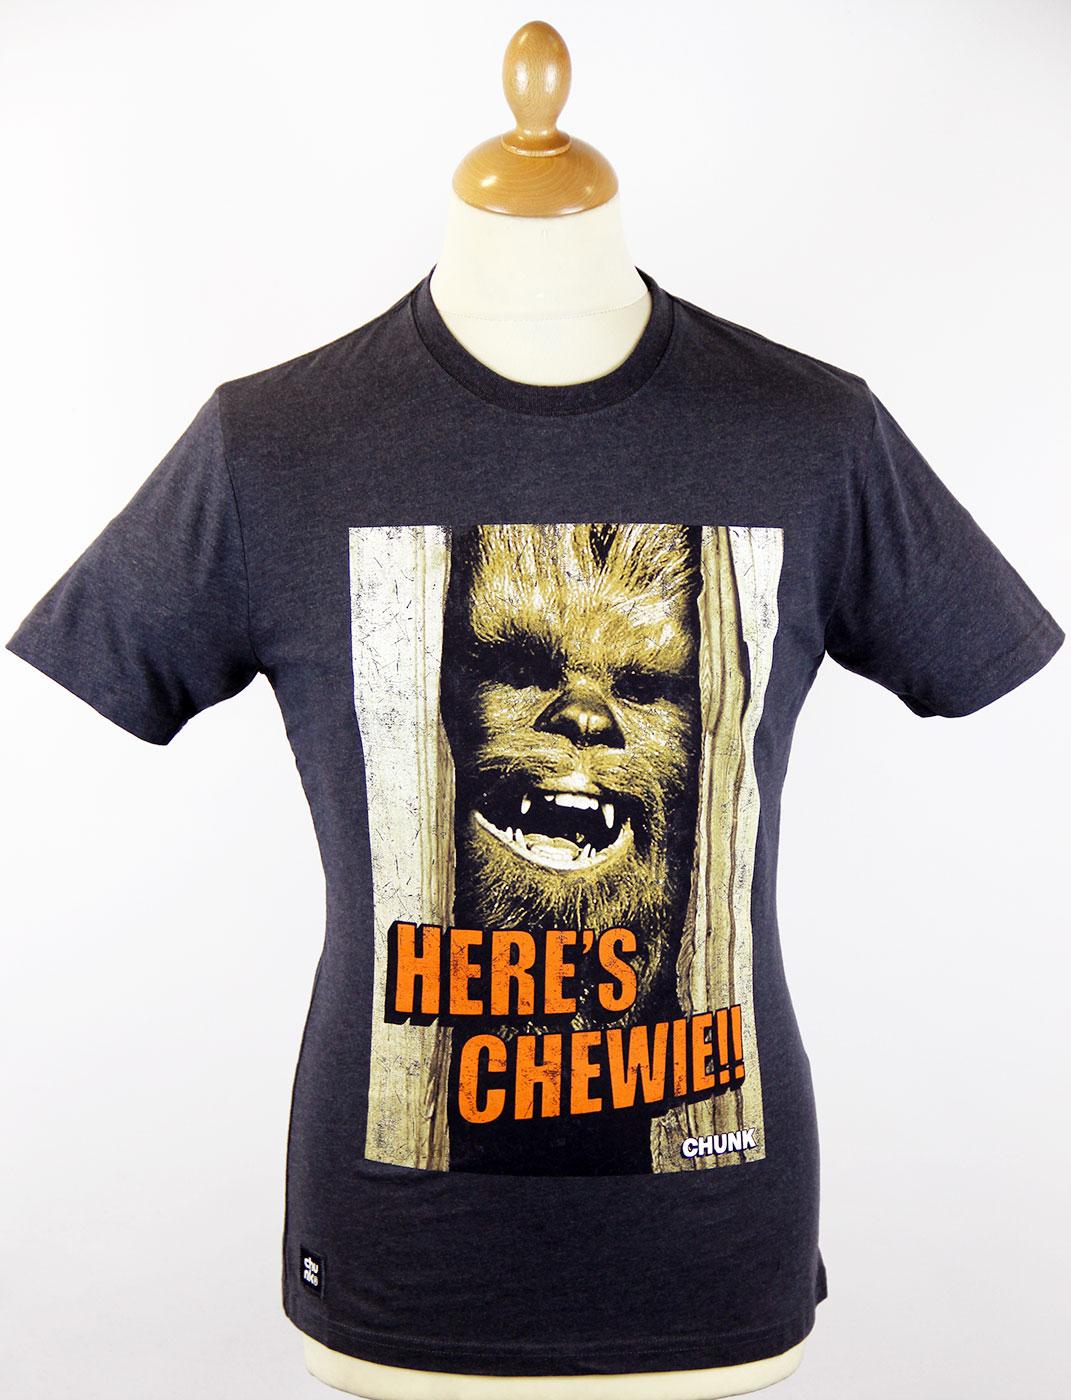 Here's Chewie CHUNK Retro 70s Indie Star Wars Tee